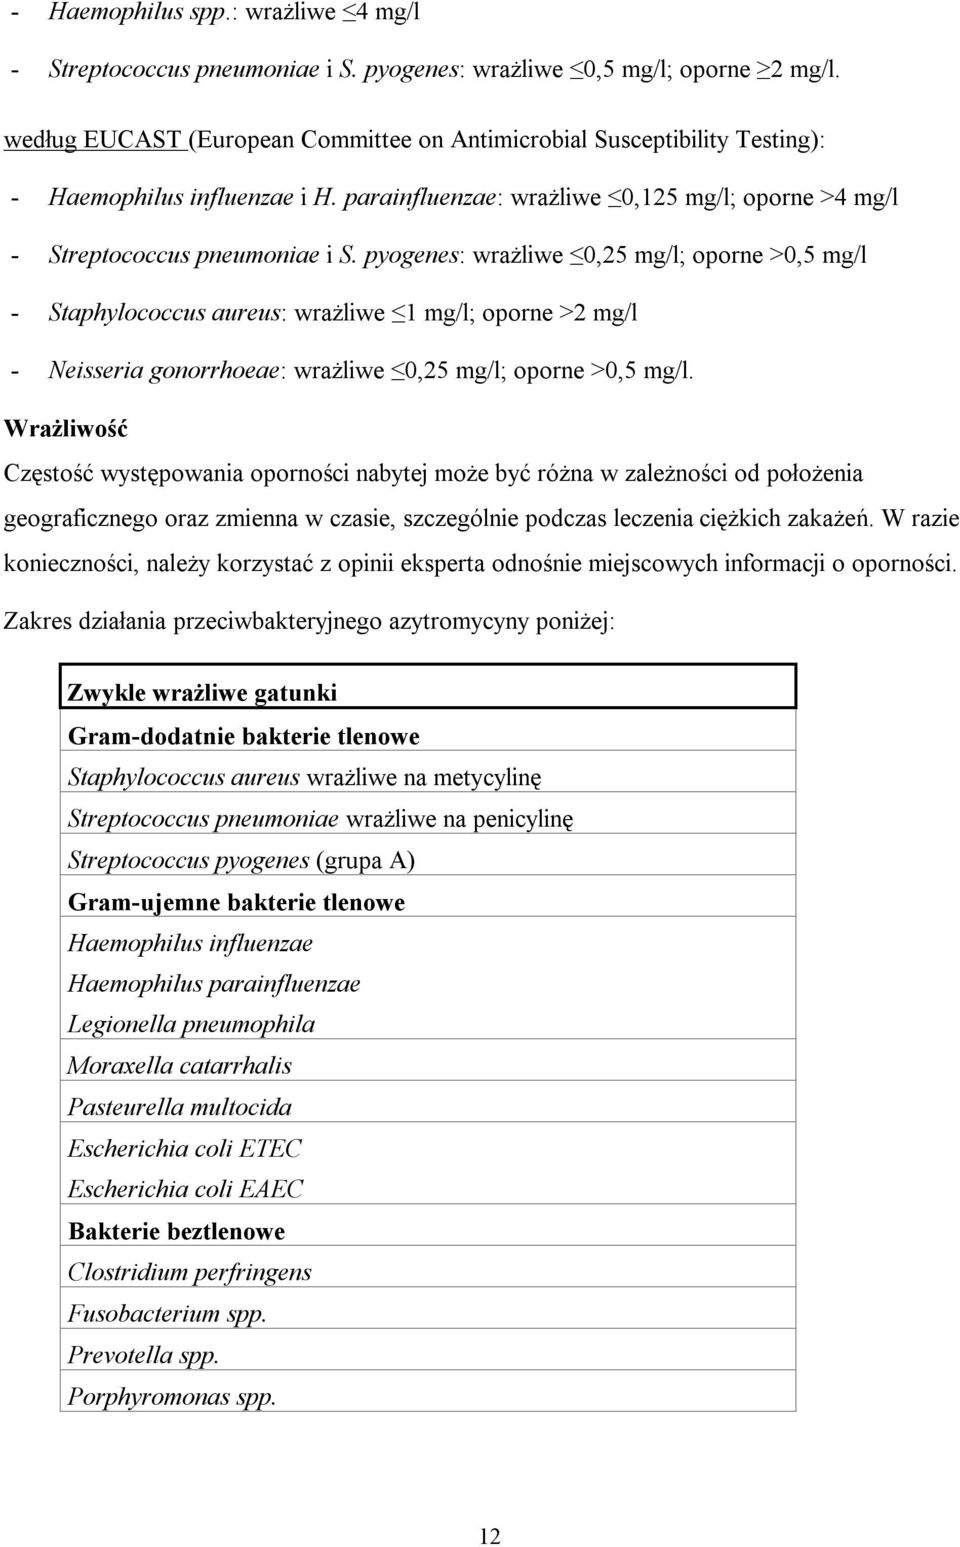 pyogenes: wrażliwe 0,25 mg/l; oporne >0,5 mg/l - Staphylococcus aureus: wrażliwe 1 mg/l; oporne >2 mg/l - Neisseria gonorrhoeae: wrażliwe 0,25 mg/l; oporne >0,5 mg/l.